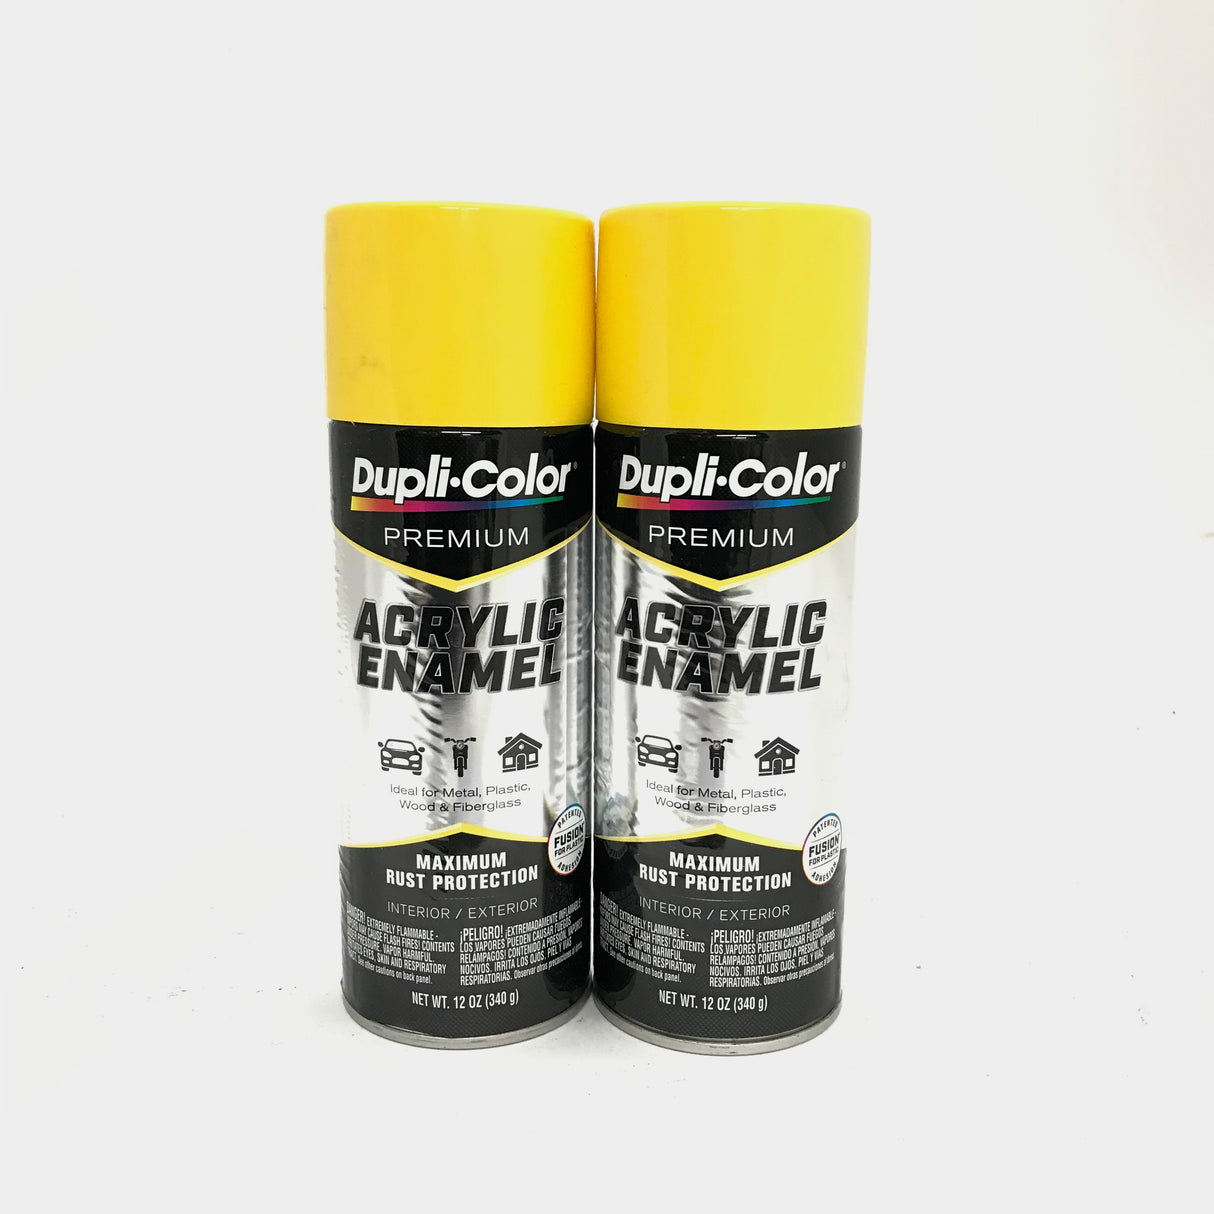 Duplicolor PAE113-2 PACK CHROME YELLOW Premium Acrylic Enamel - Rust Protection - 12 OZ